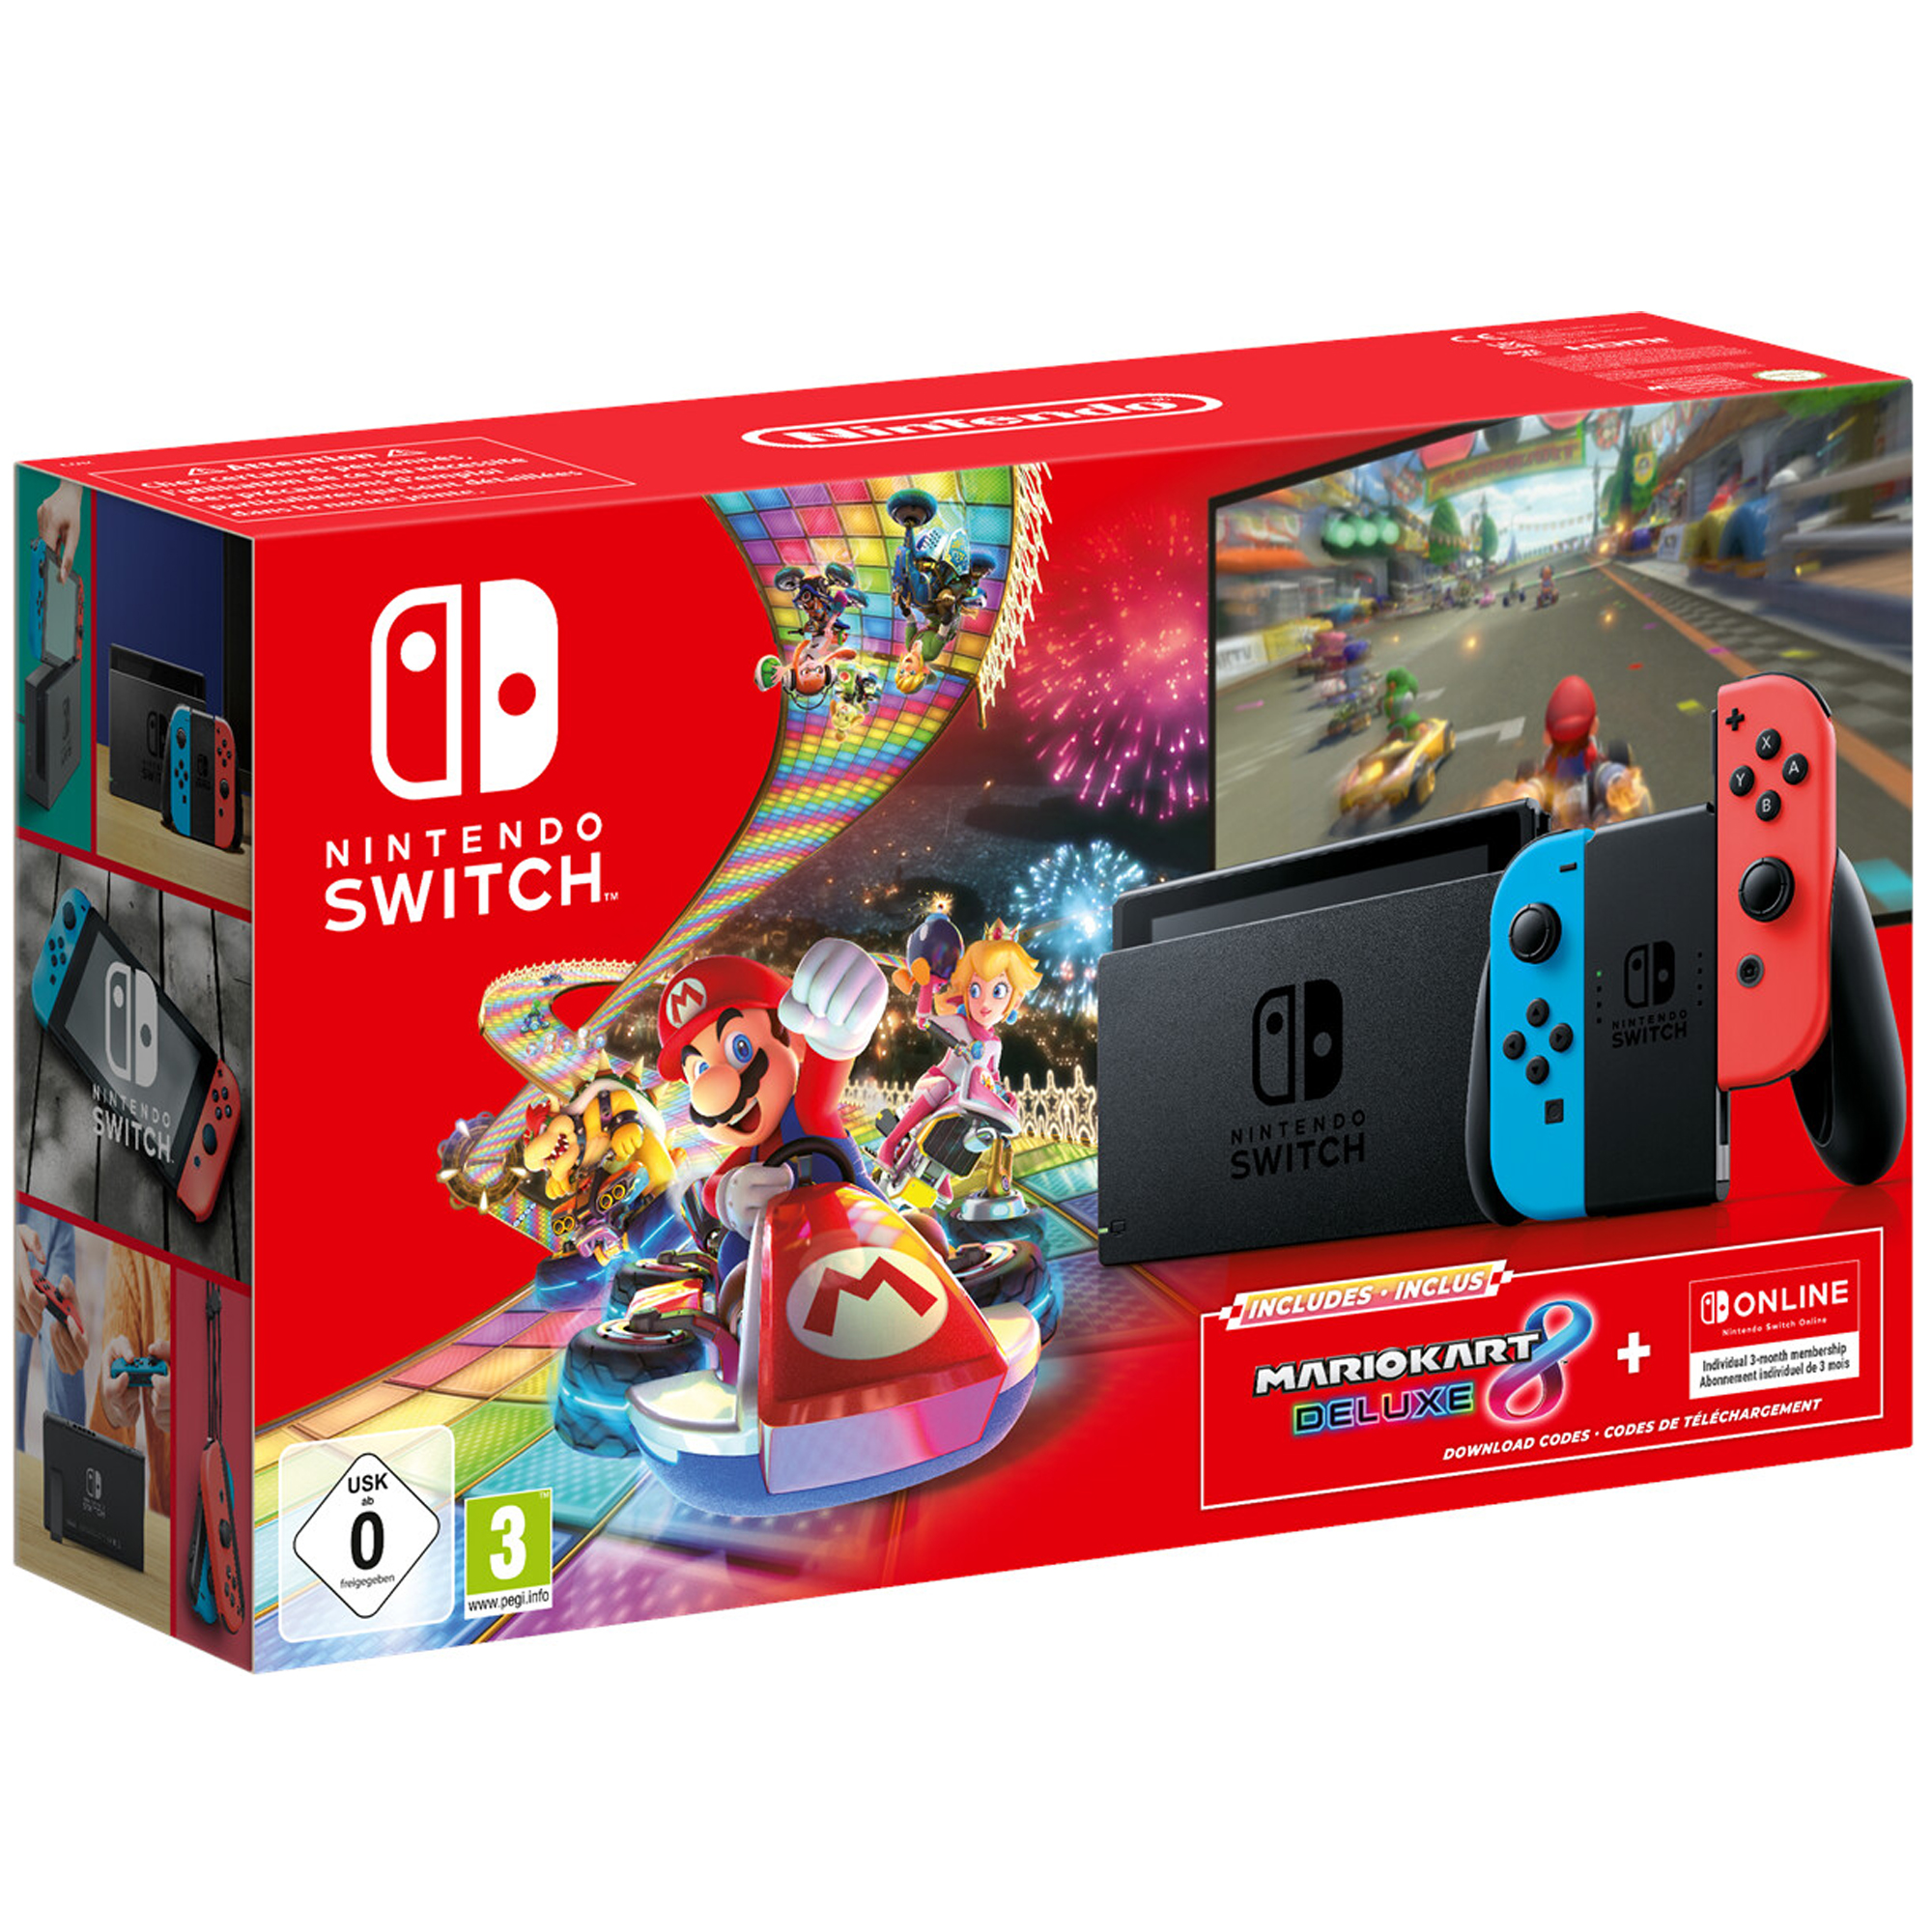 Neon-Rot/Neon-Blau Nintendo Switch inkl.